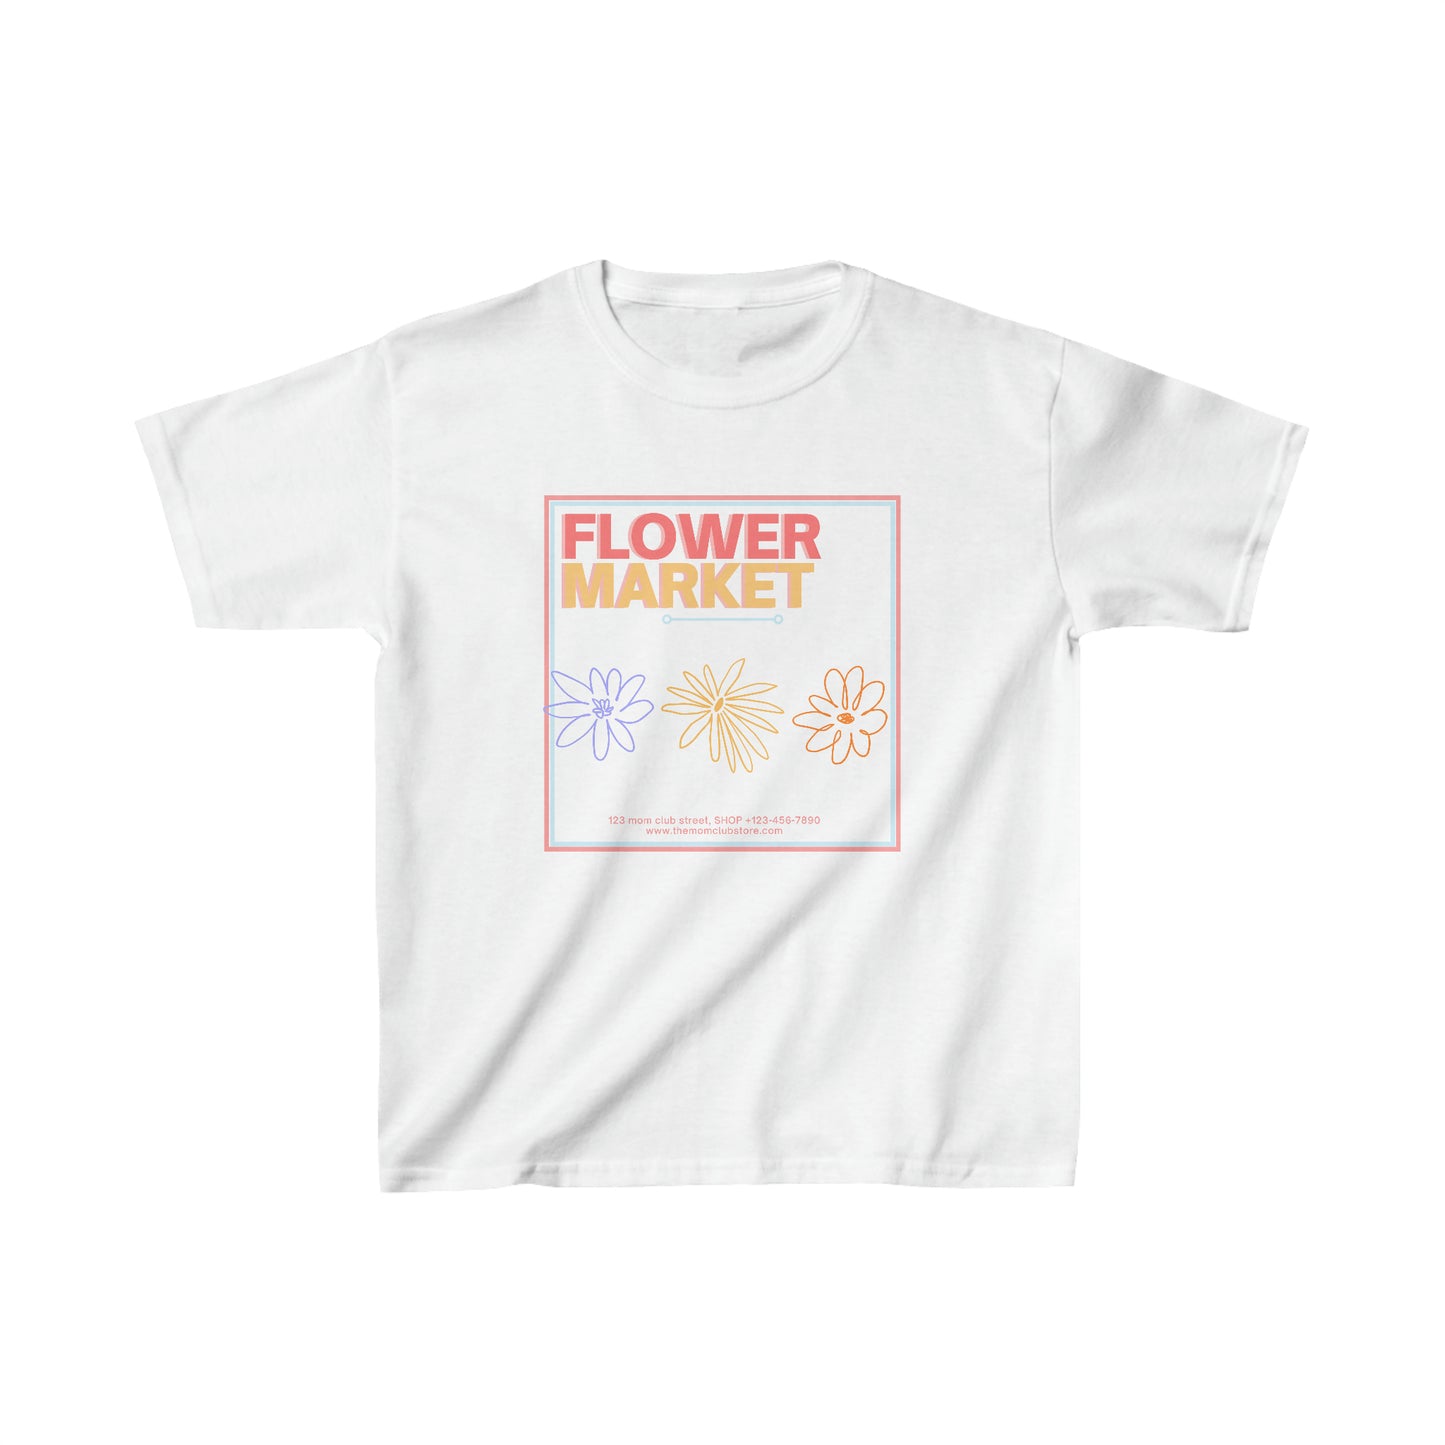 FLOWER MARKET t-shirt - child